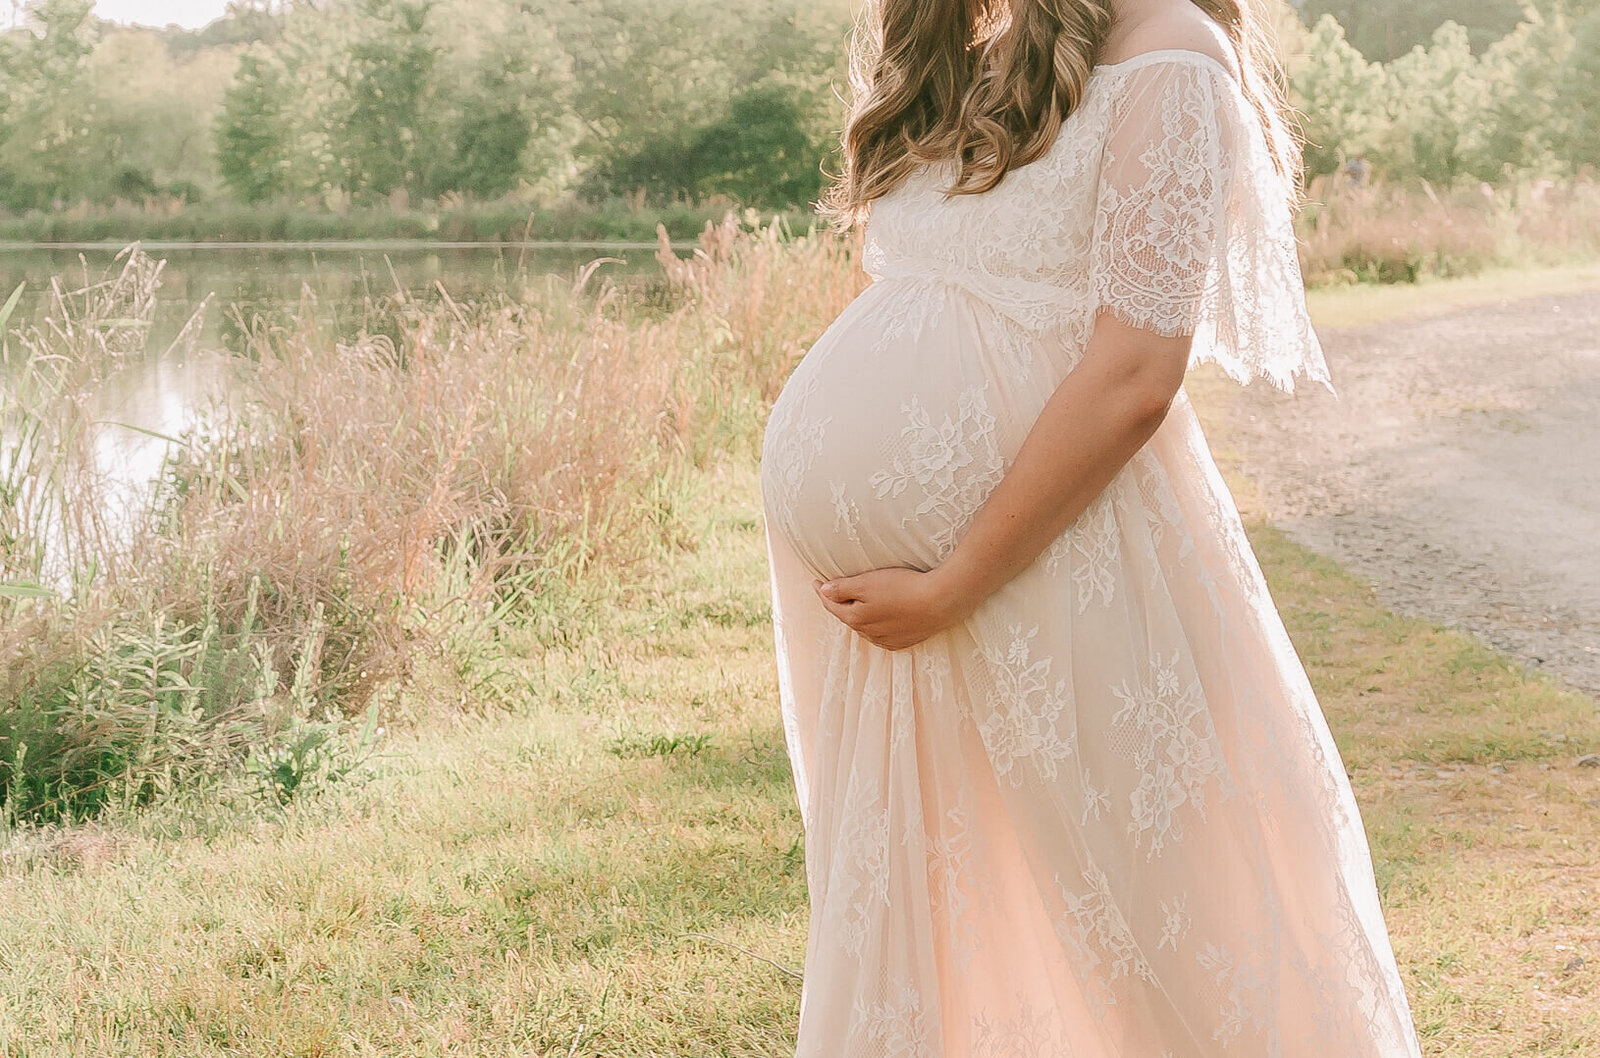 raleigh-maternity-photographer-7